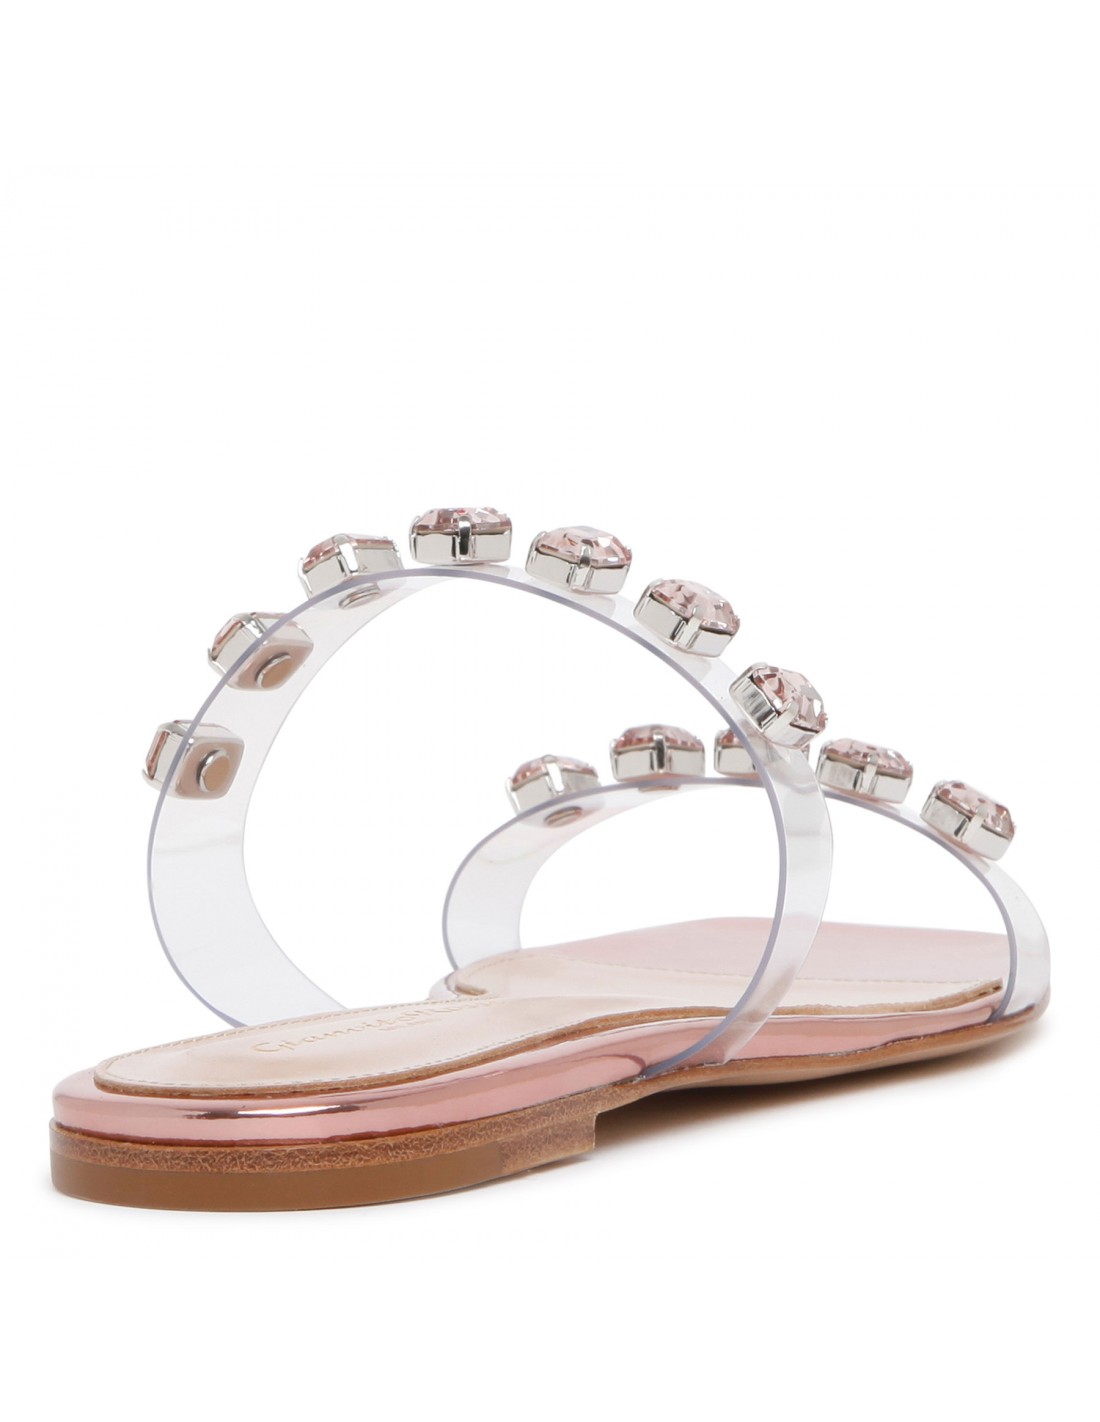 Atomic gem flat sandals